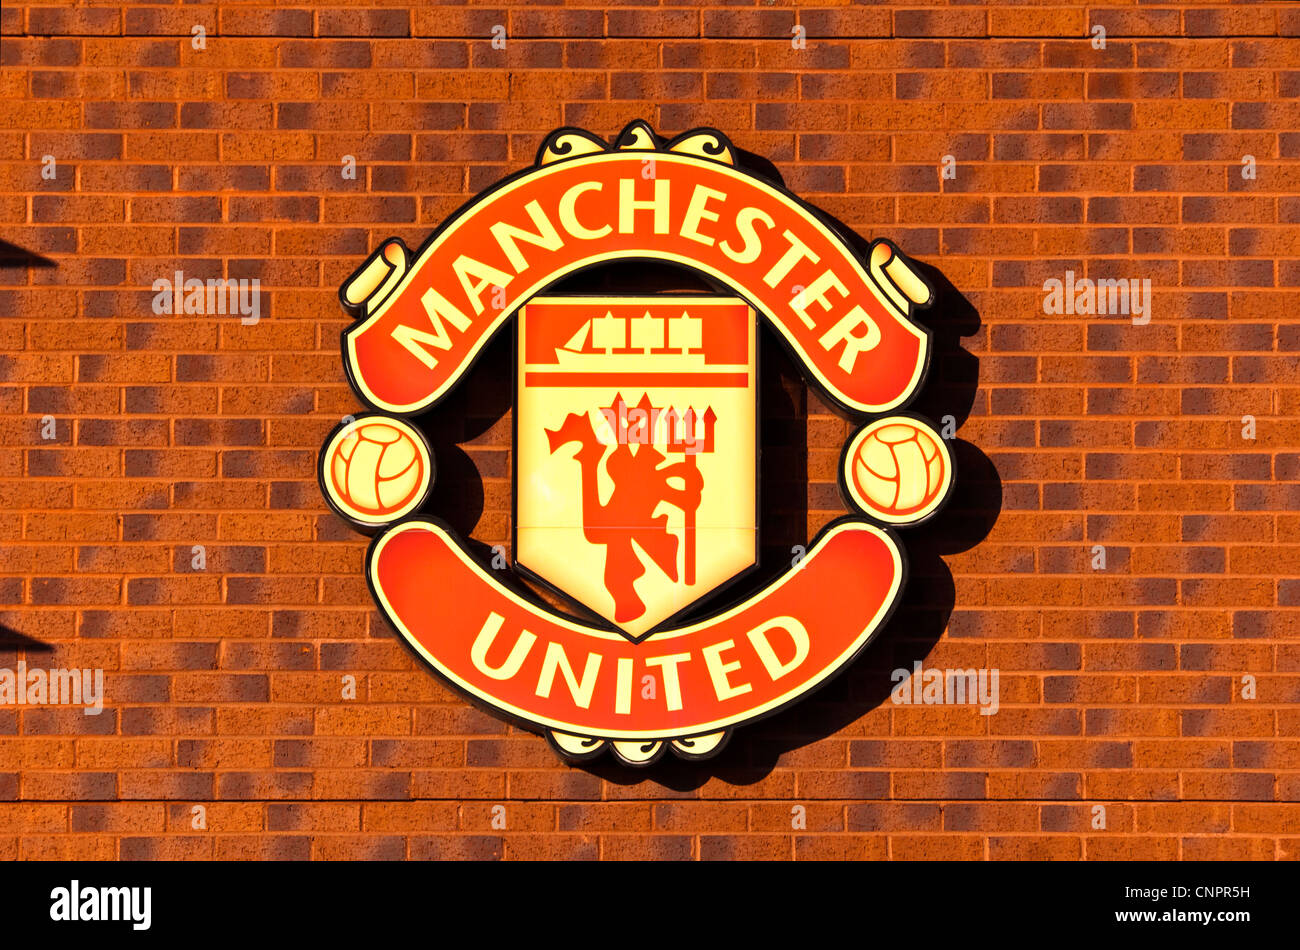 Emblema del Manchester United en la pared fuera de las Naciones store, Old Trafford, Manchester, Inglaterra, Reino Unido. Foto de stock